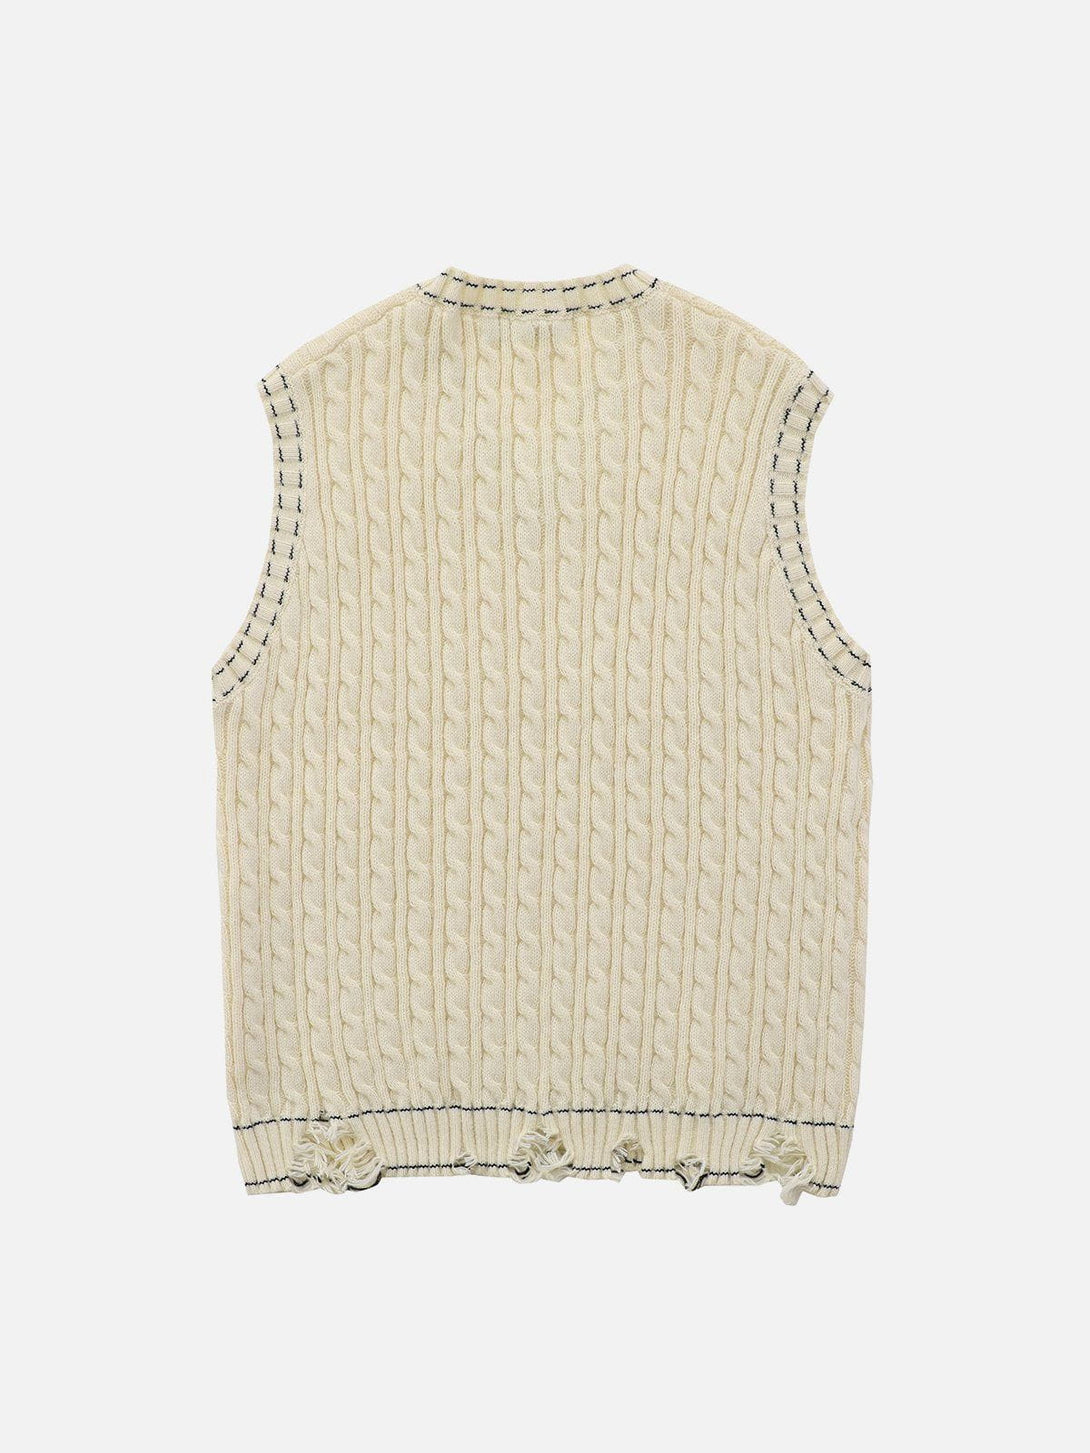 Majesda® - Cut Hem Sweater Vest outfit ideas streetwear fashion